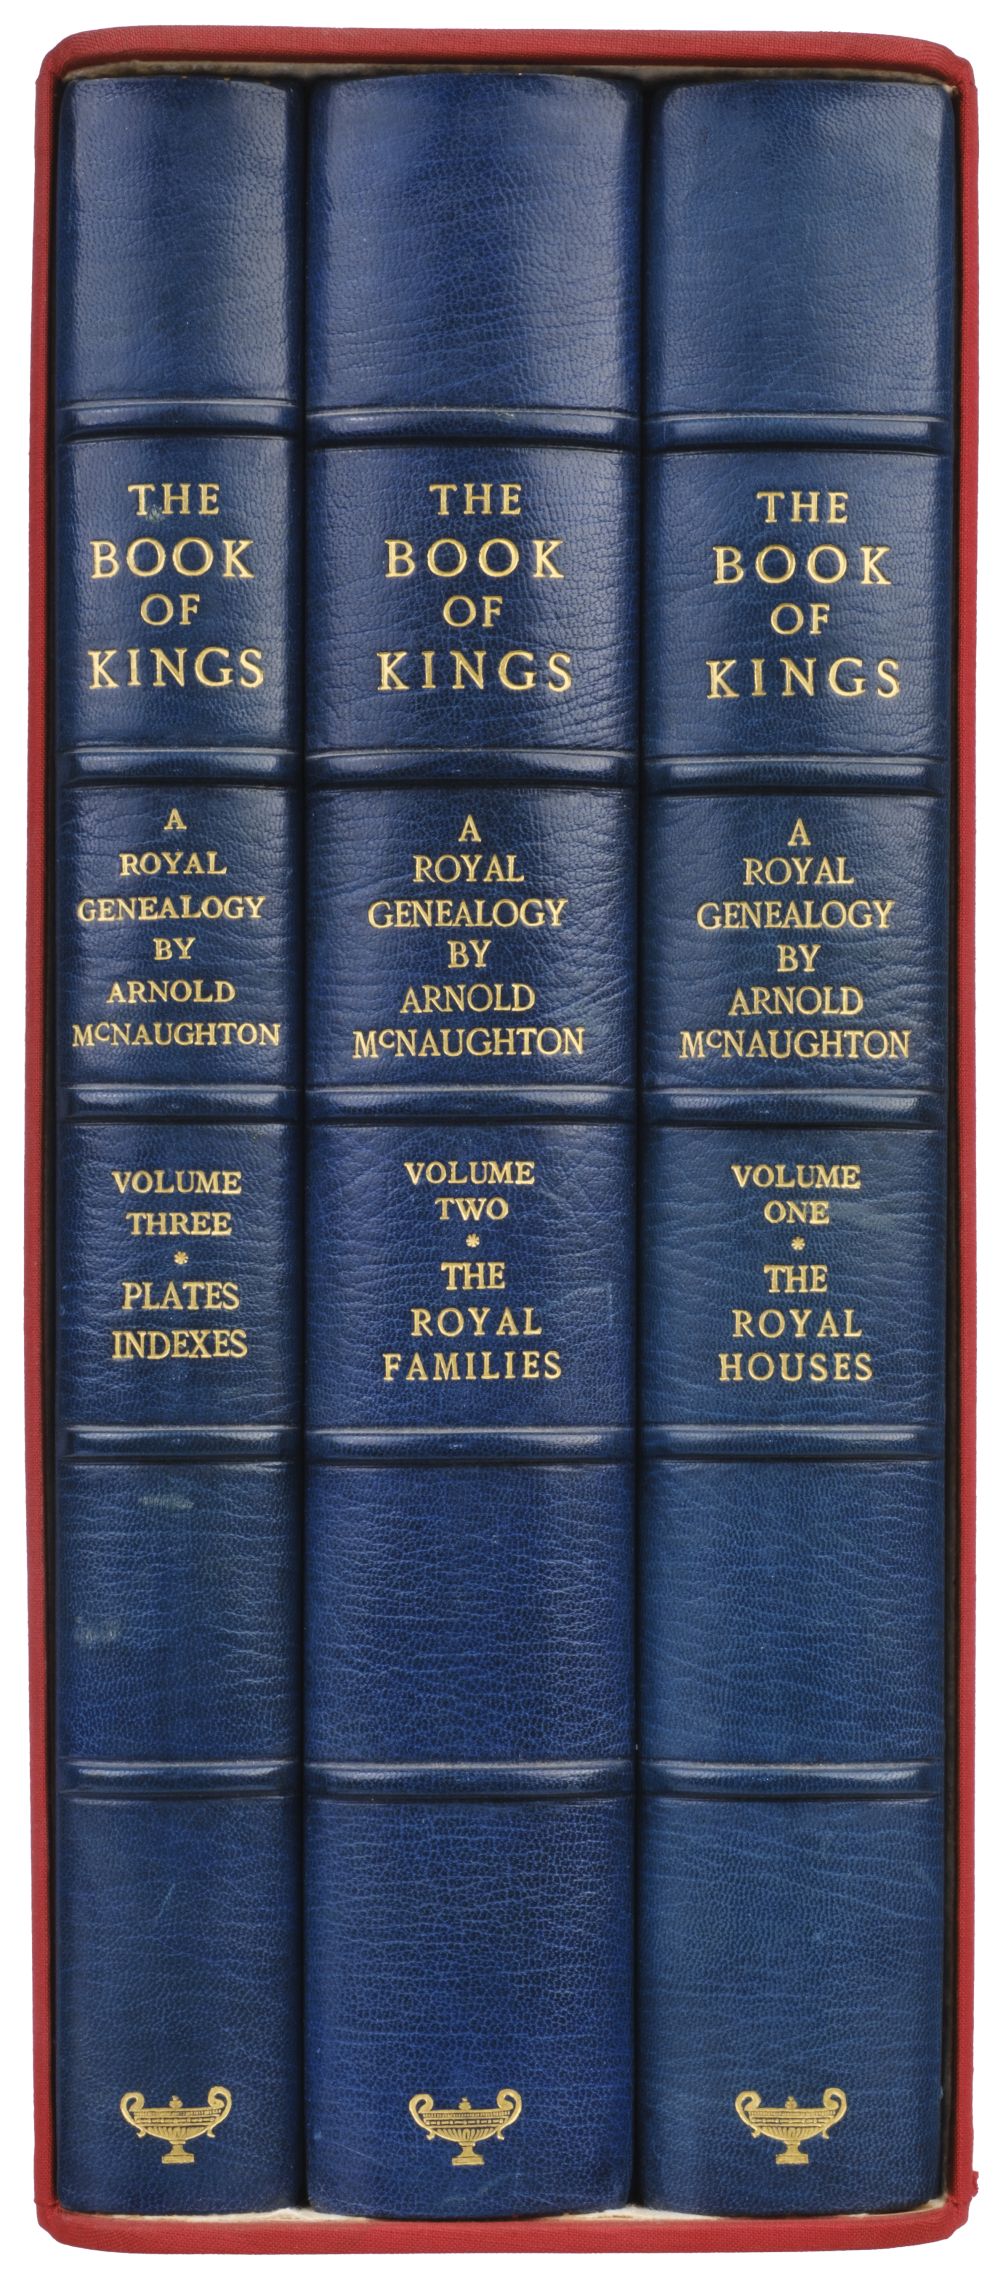 McNaughton (Arnold). The Book of Kings, a Royal Genealogy, London: The Arcadia Press, 1973